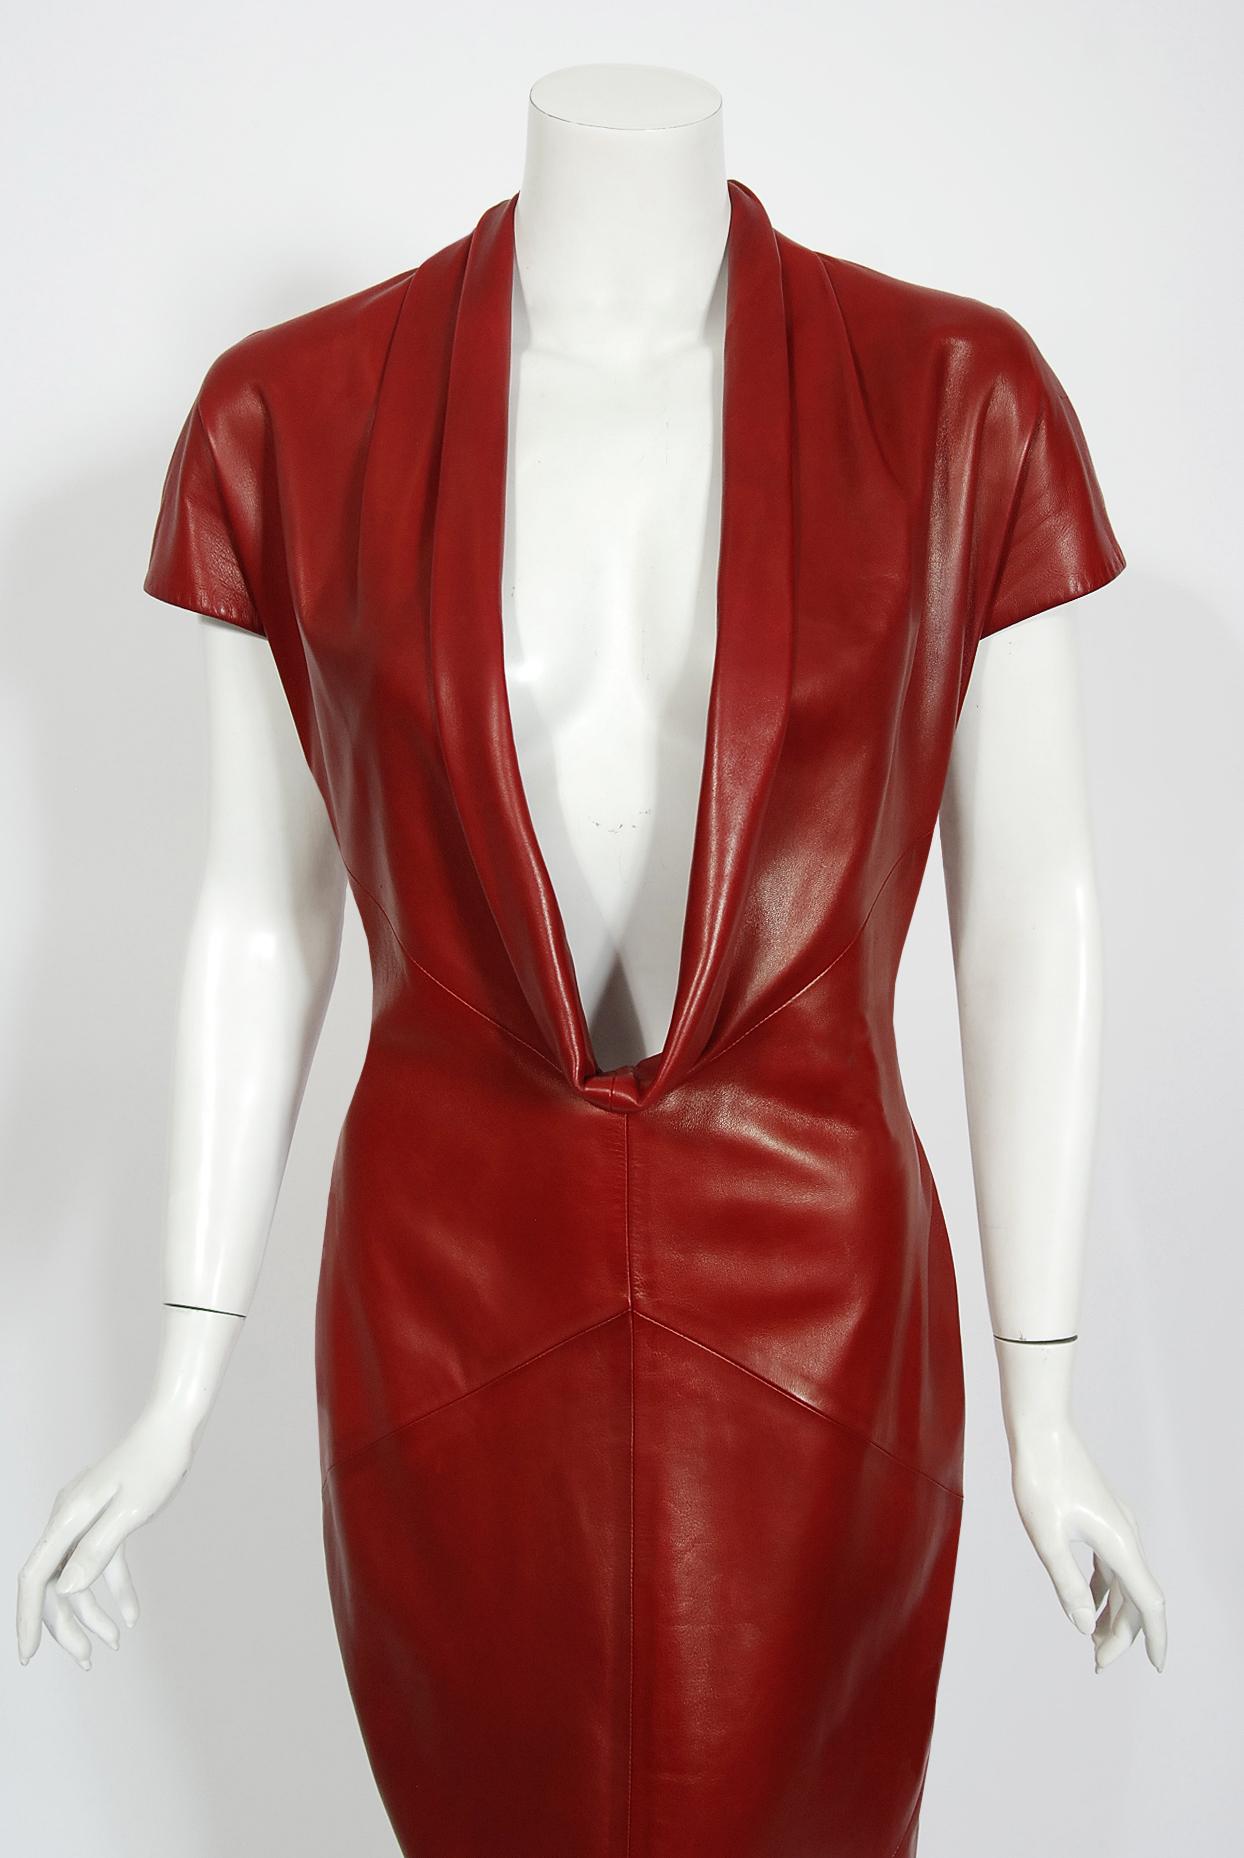 alexander mcqueen red leather dress